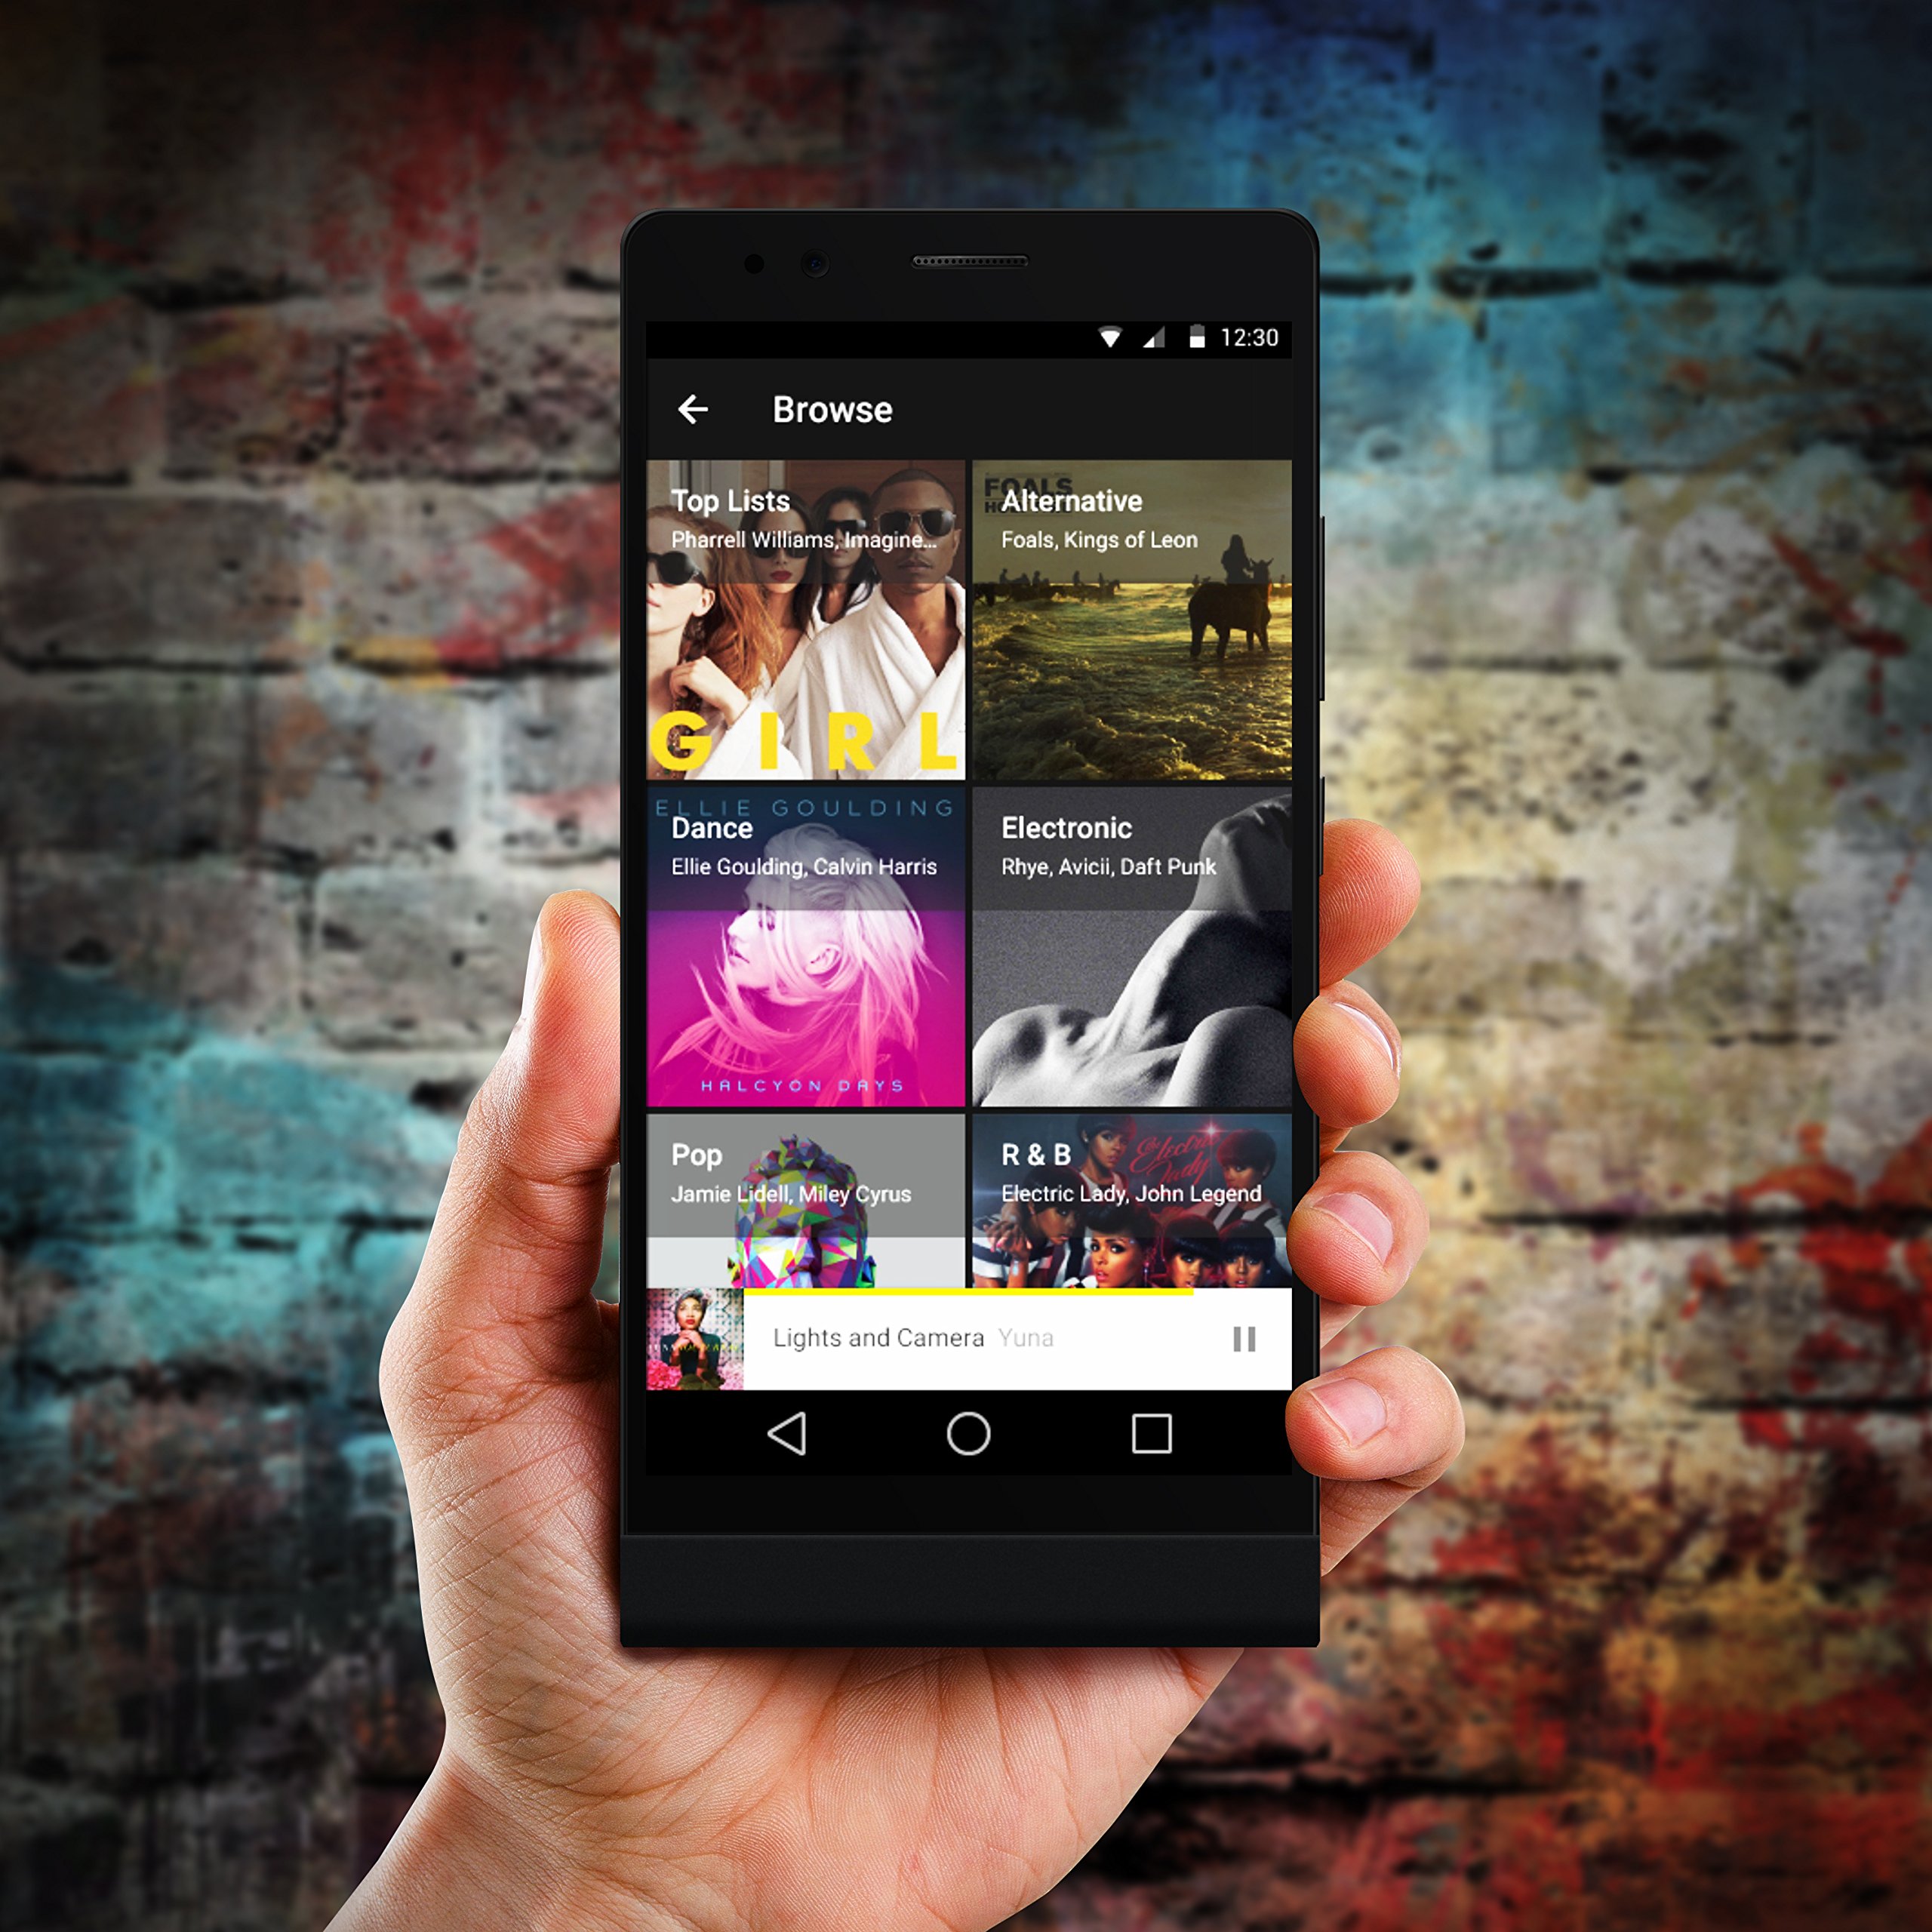 BLU L290U Life 8 XL Unlocked GSM Smartphone with 8 GB Internal Memory, Android OS, v4.4.2 KitKat (Black)